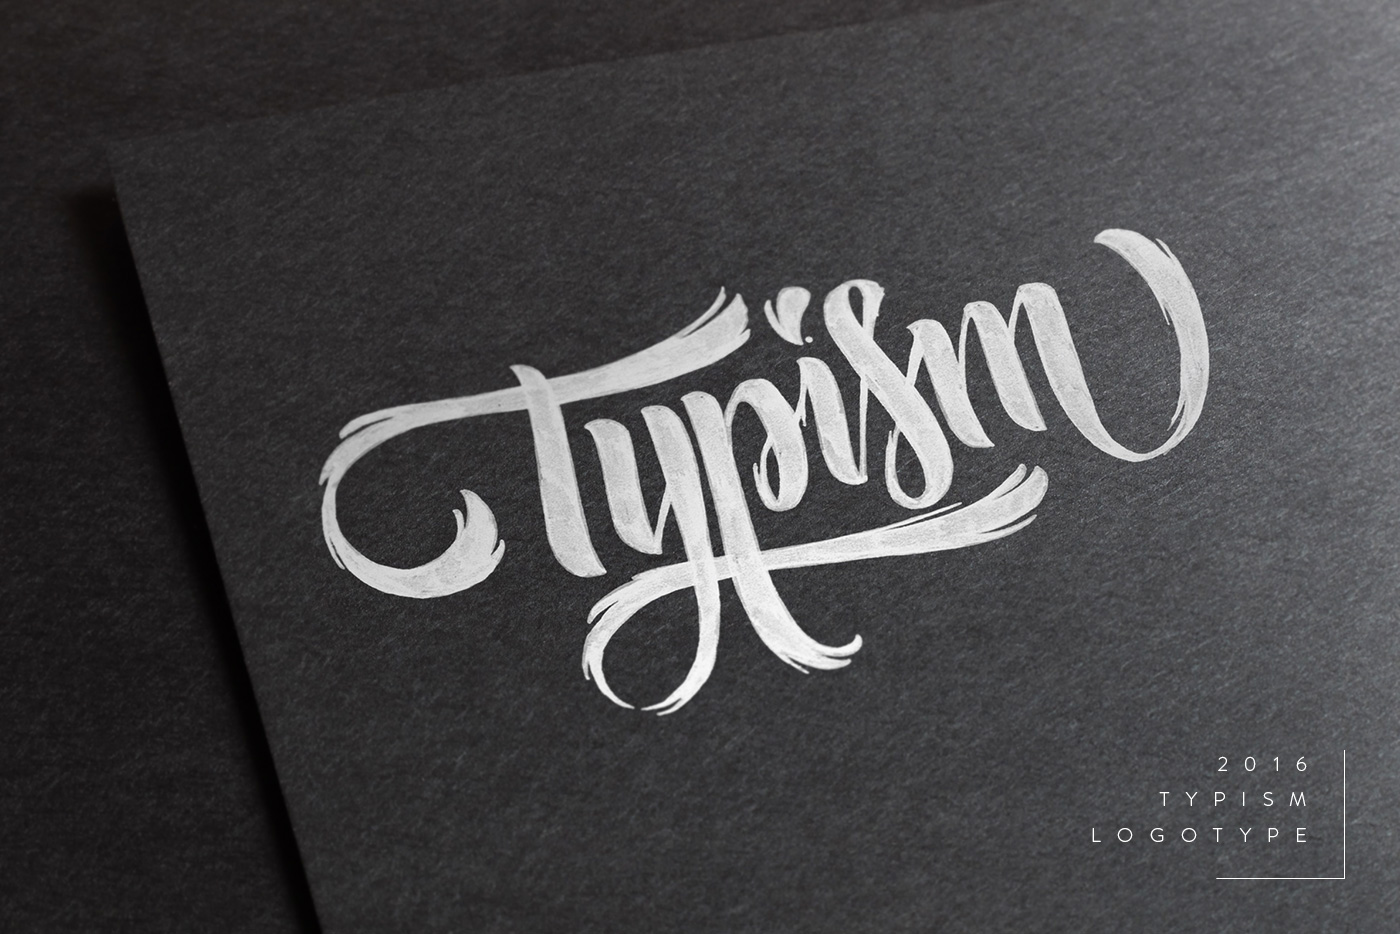 typism Logotype Logo Design lettering hand drawn type